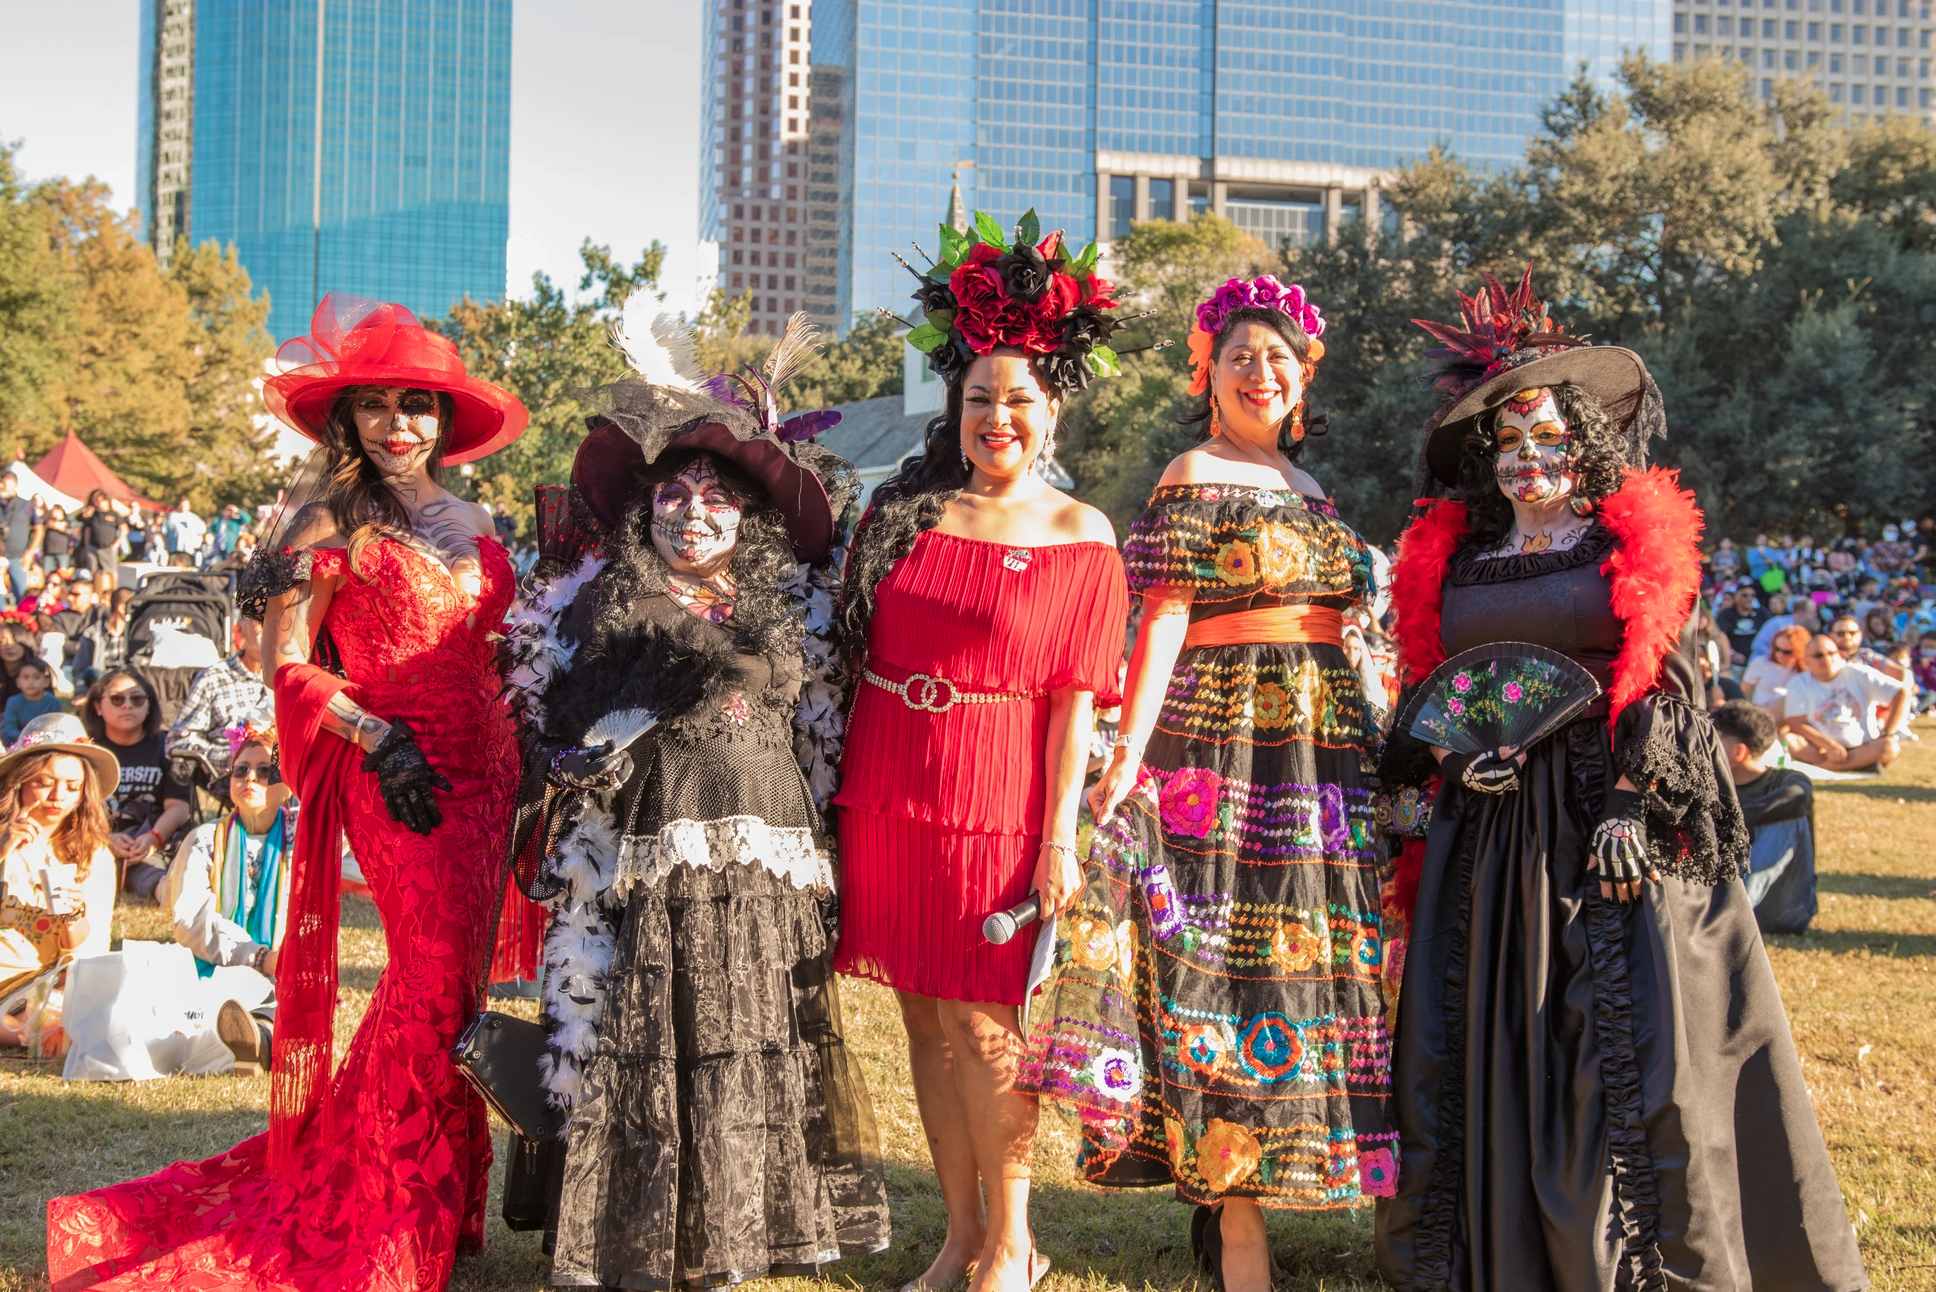 Dia de los Muertos Festival Coming to Houston, Though Parade Cancelled